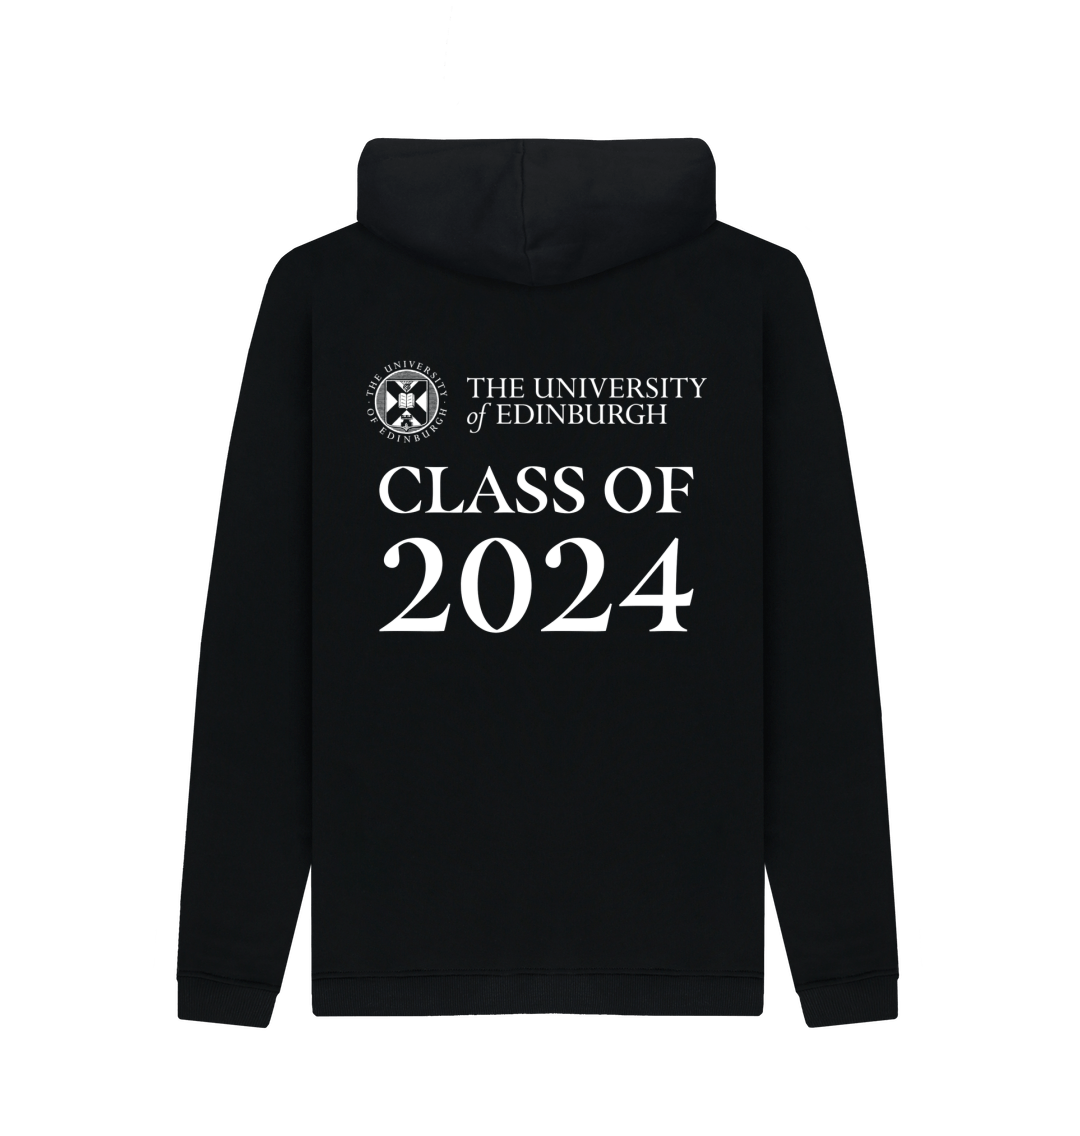 Class of 2024 Hoodie